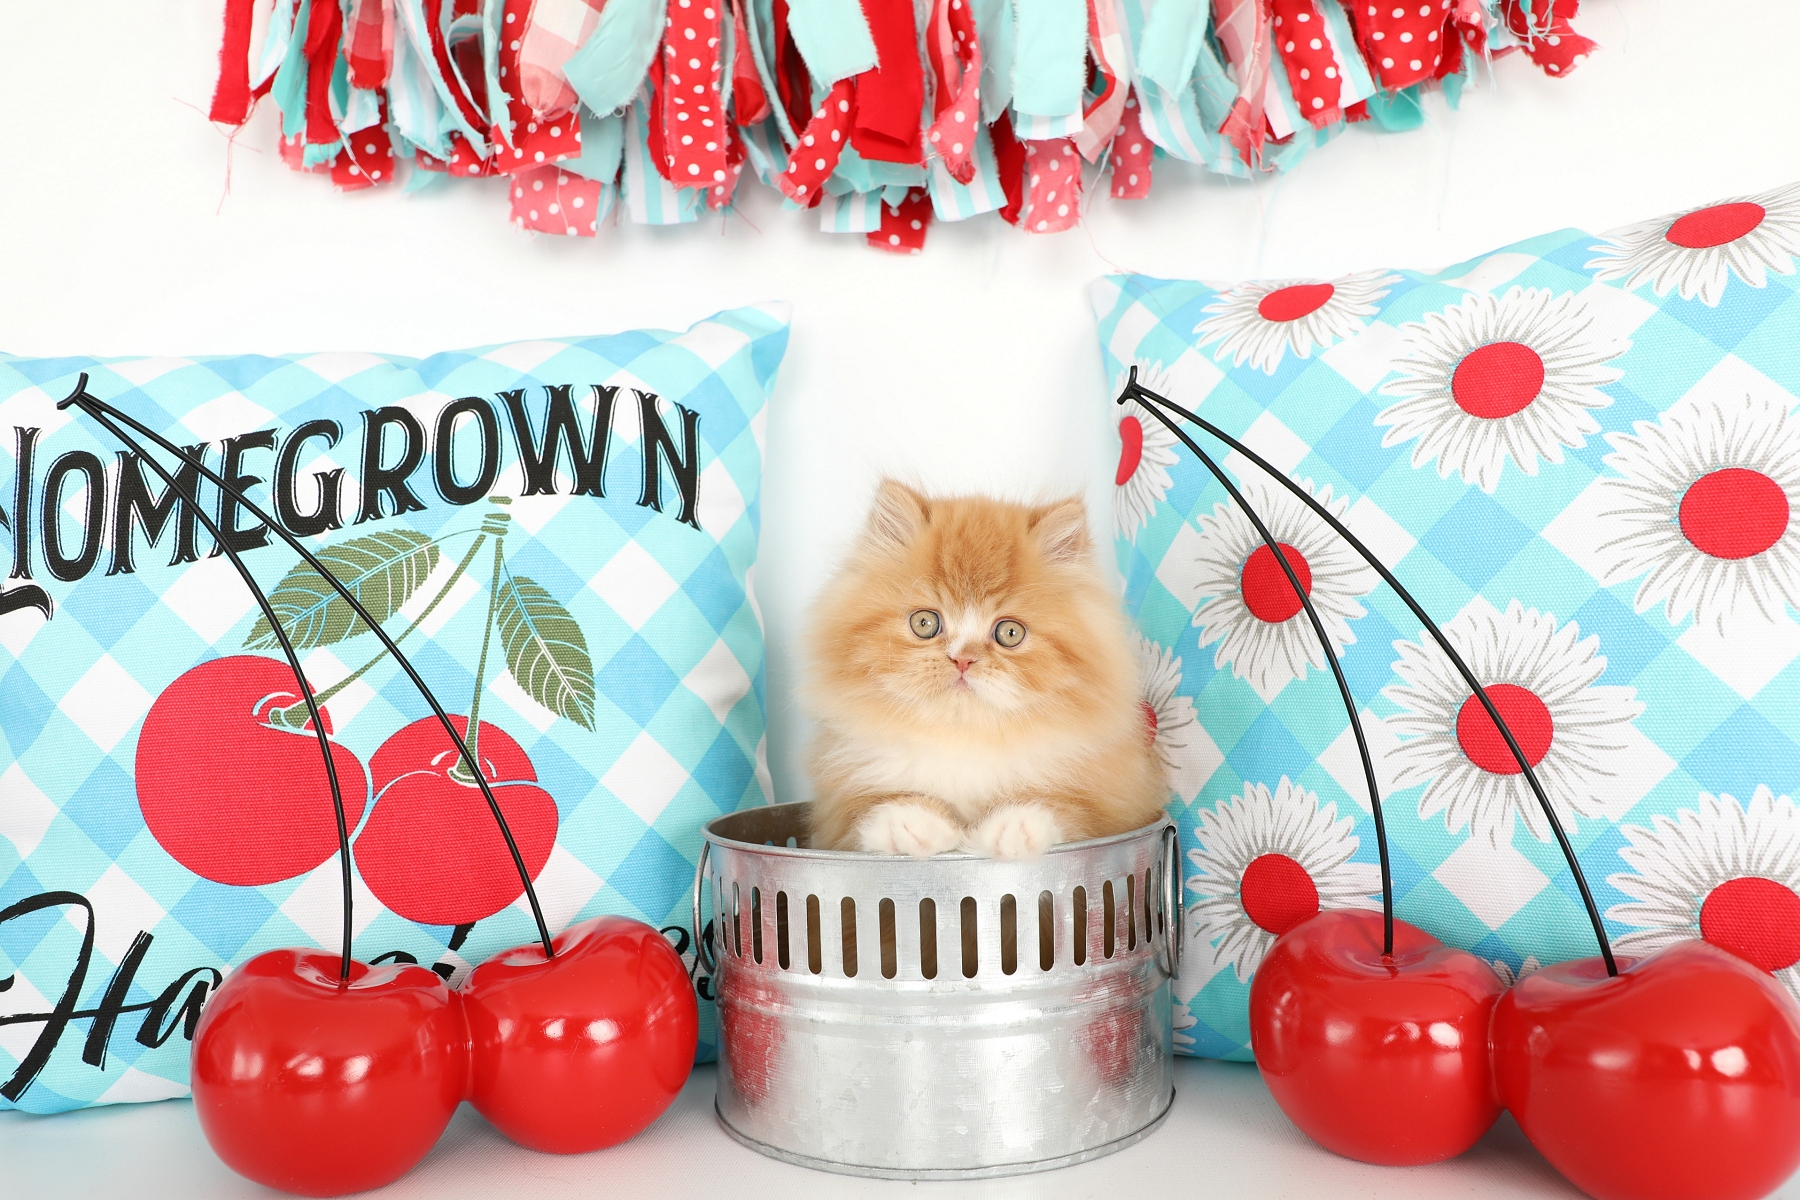 Red & White Persian Kitten